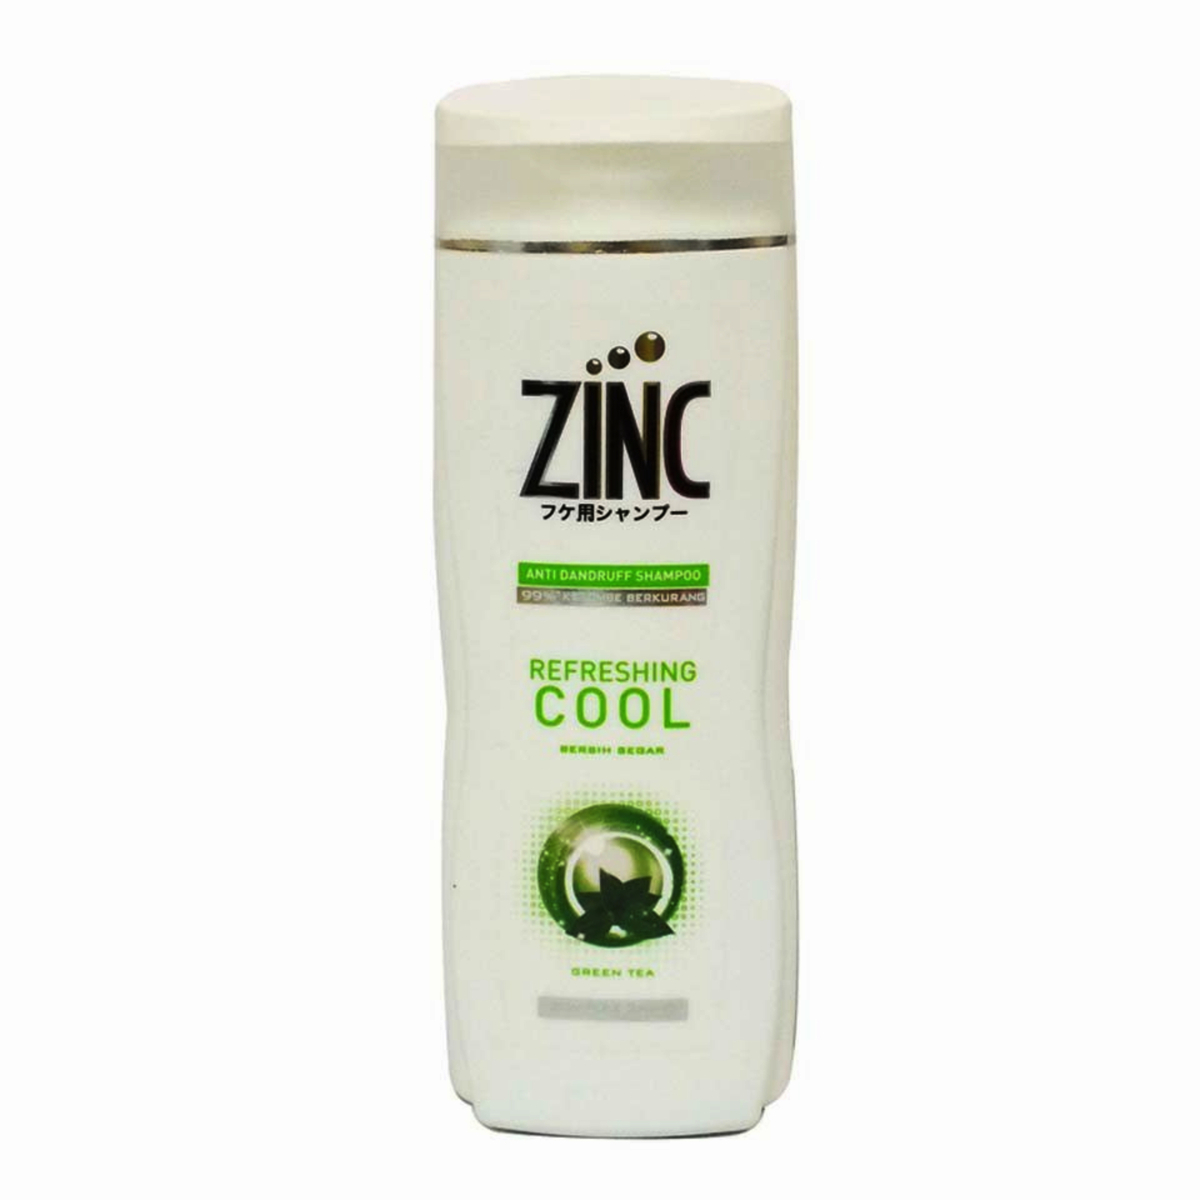 Zinc Sampo Refreshing Cool 340ml